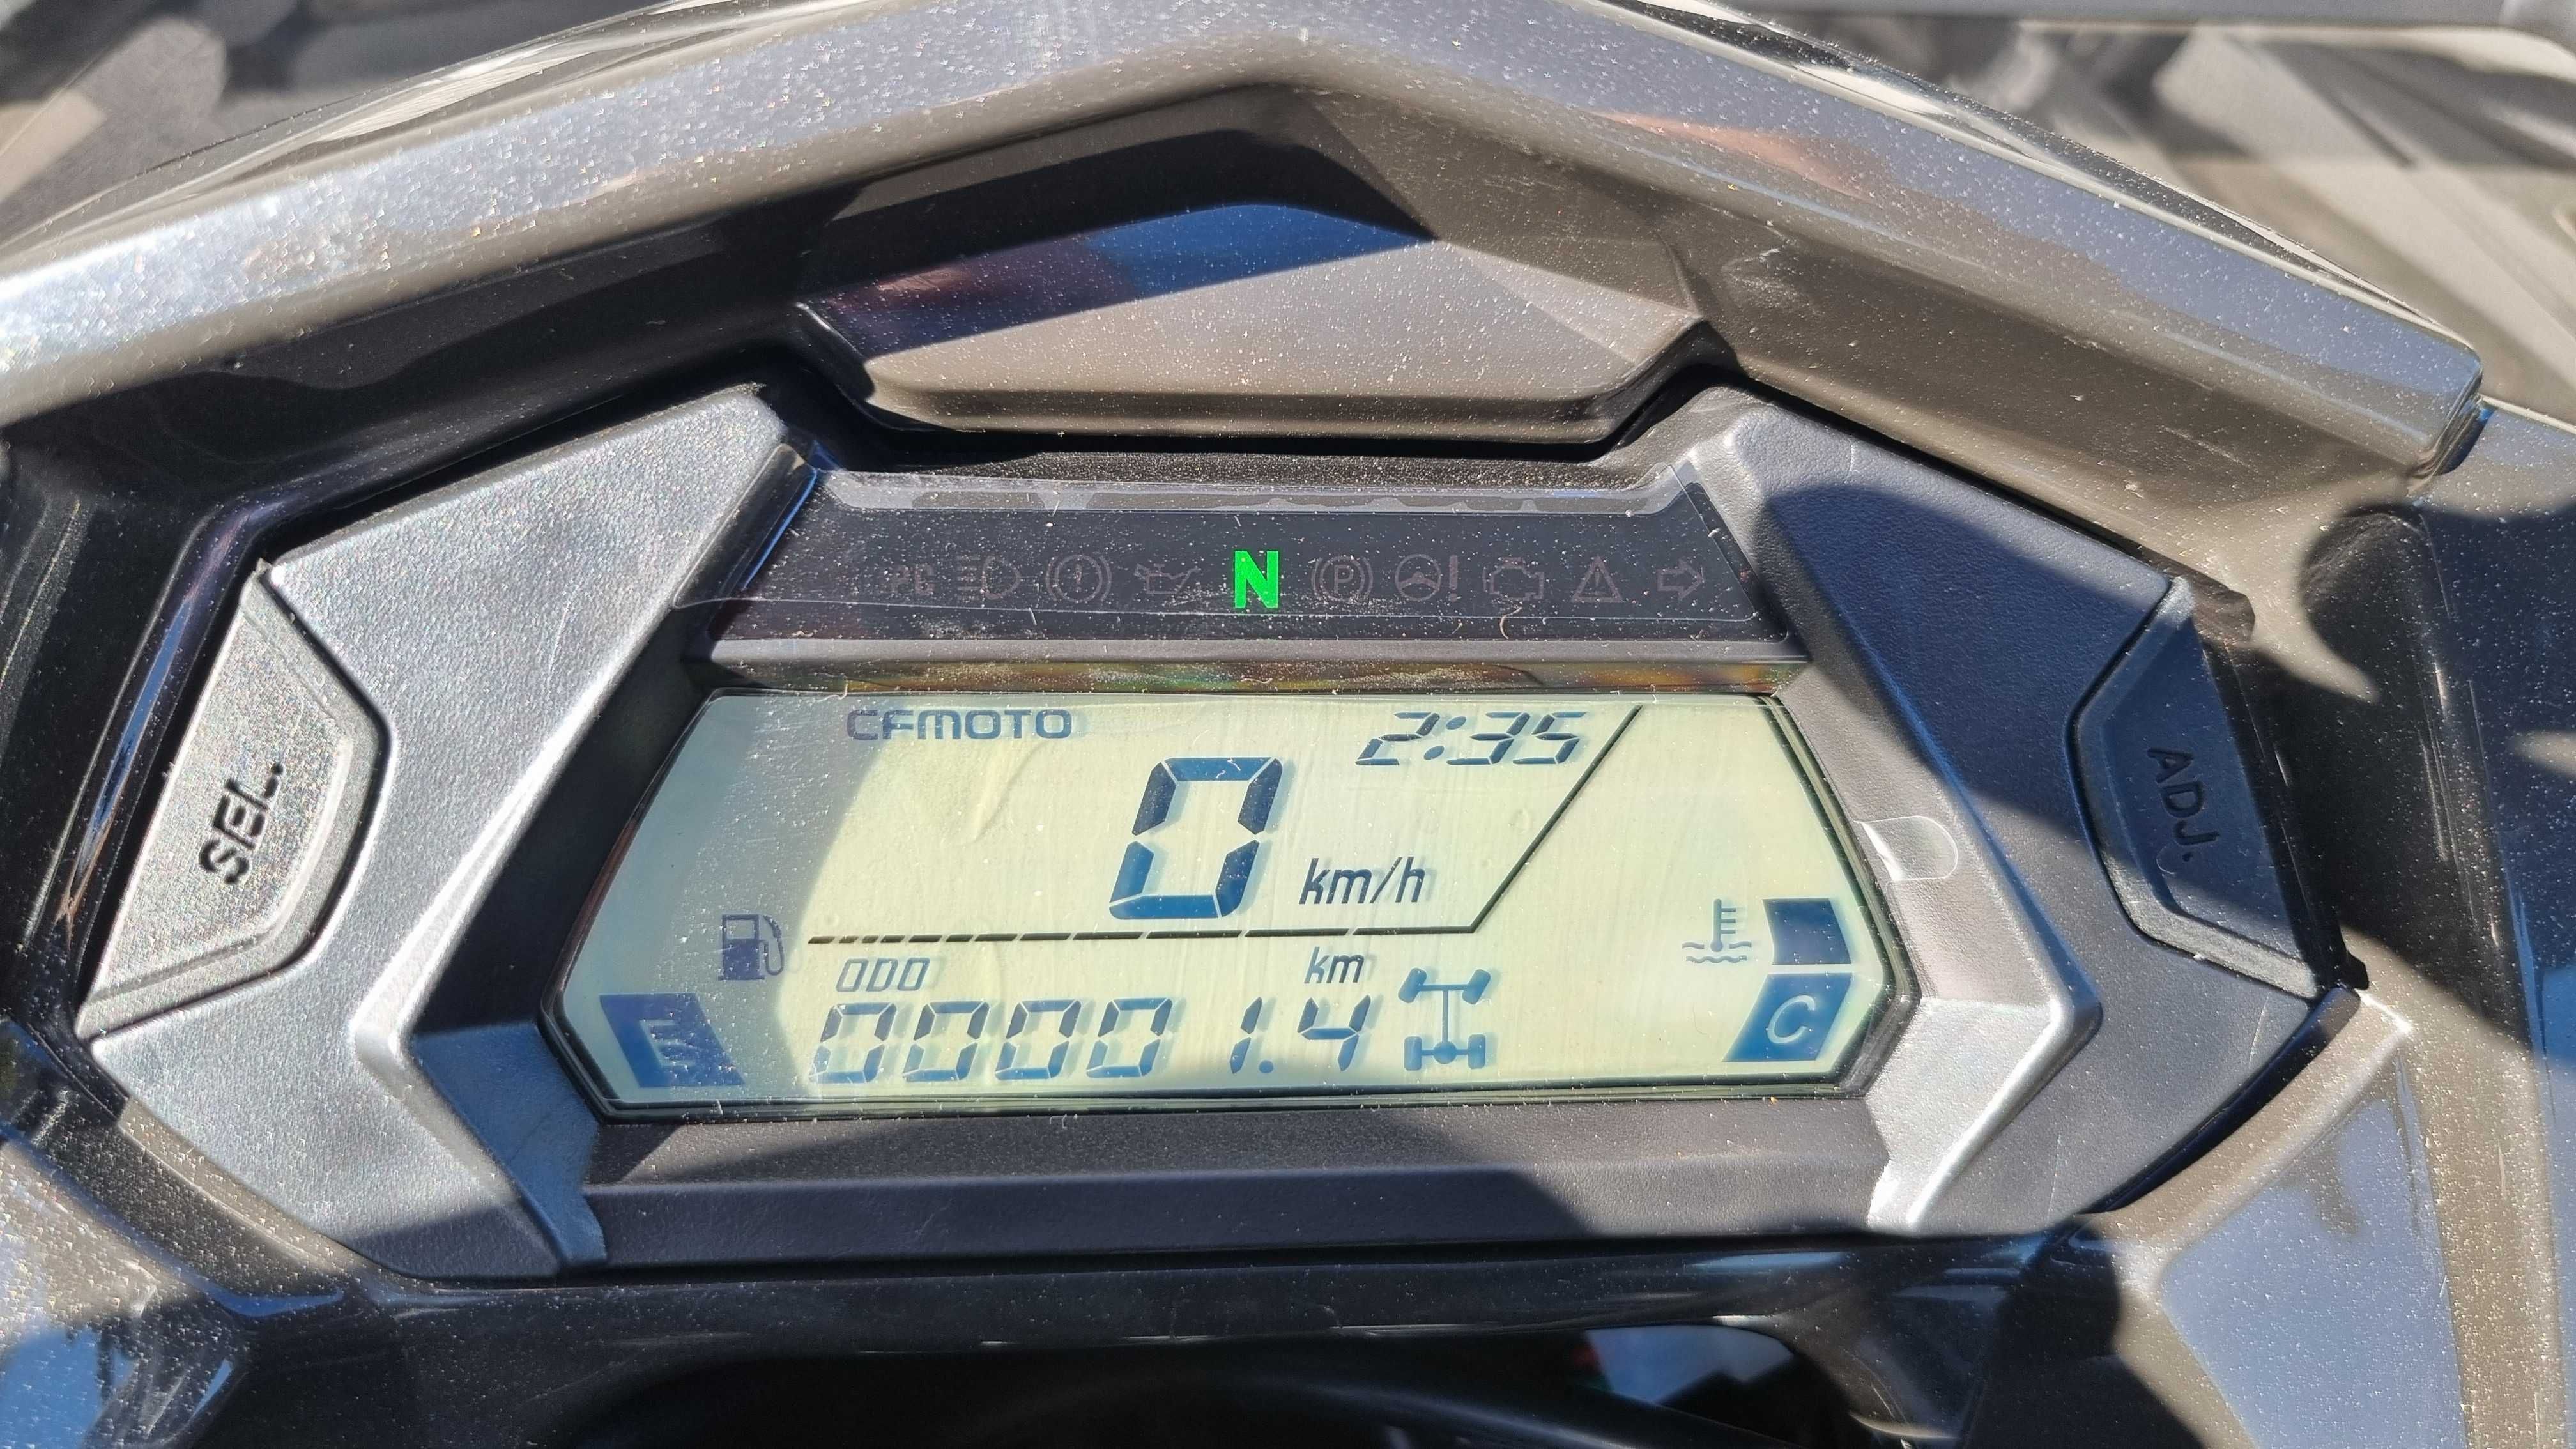 CF Moto C FORCE 520 LONG 500 T3b od Muddy